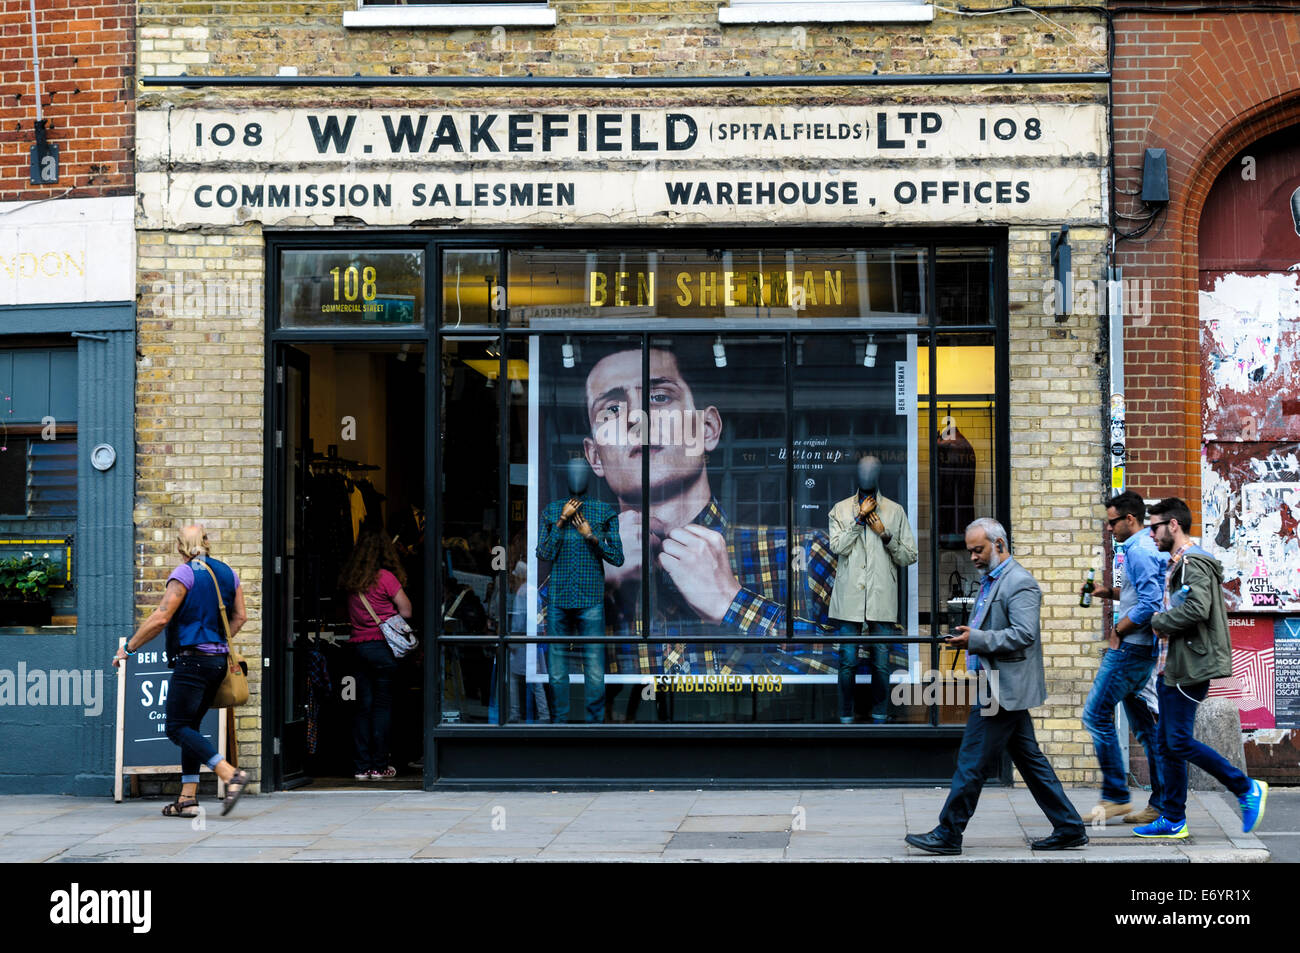 Ben SHERMAN shop in Spitafields, London, UK Stock Photo - Alamy